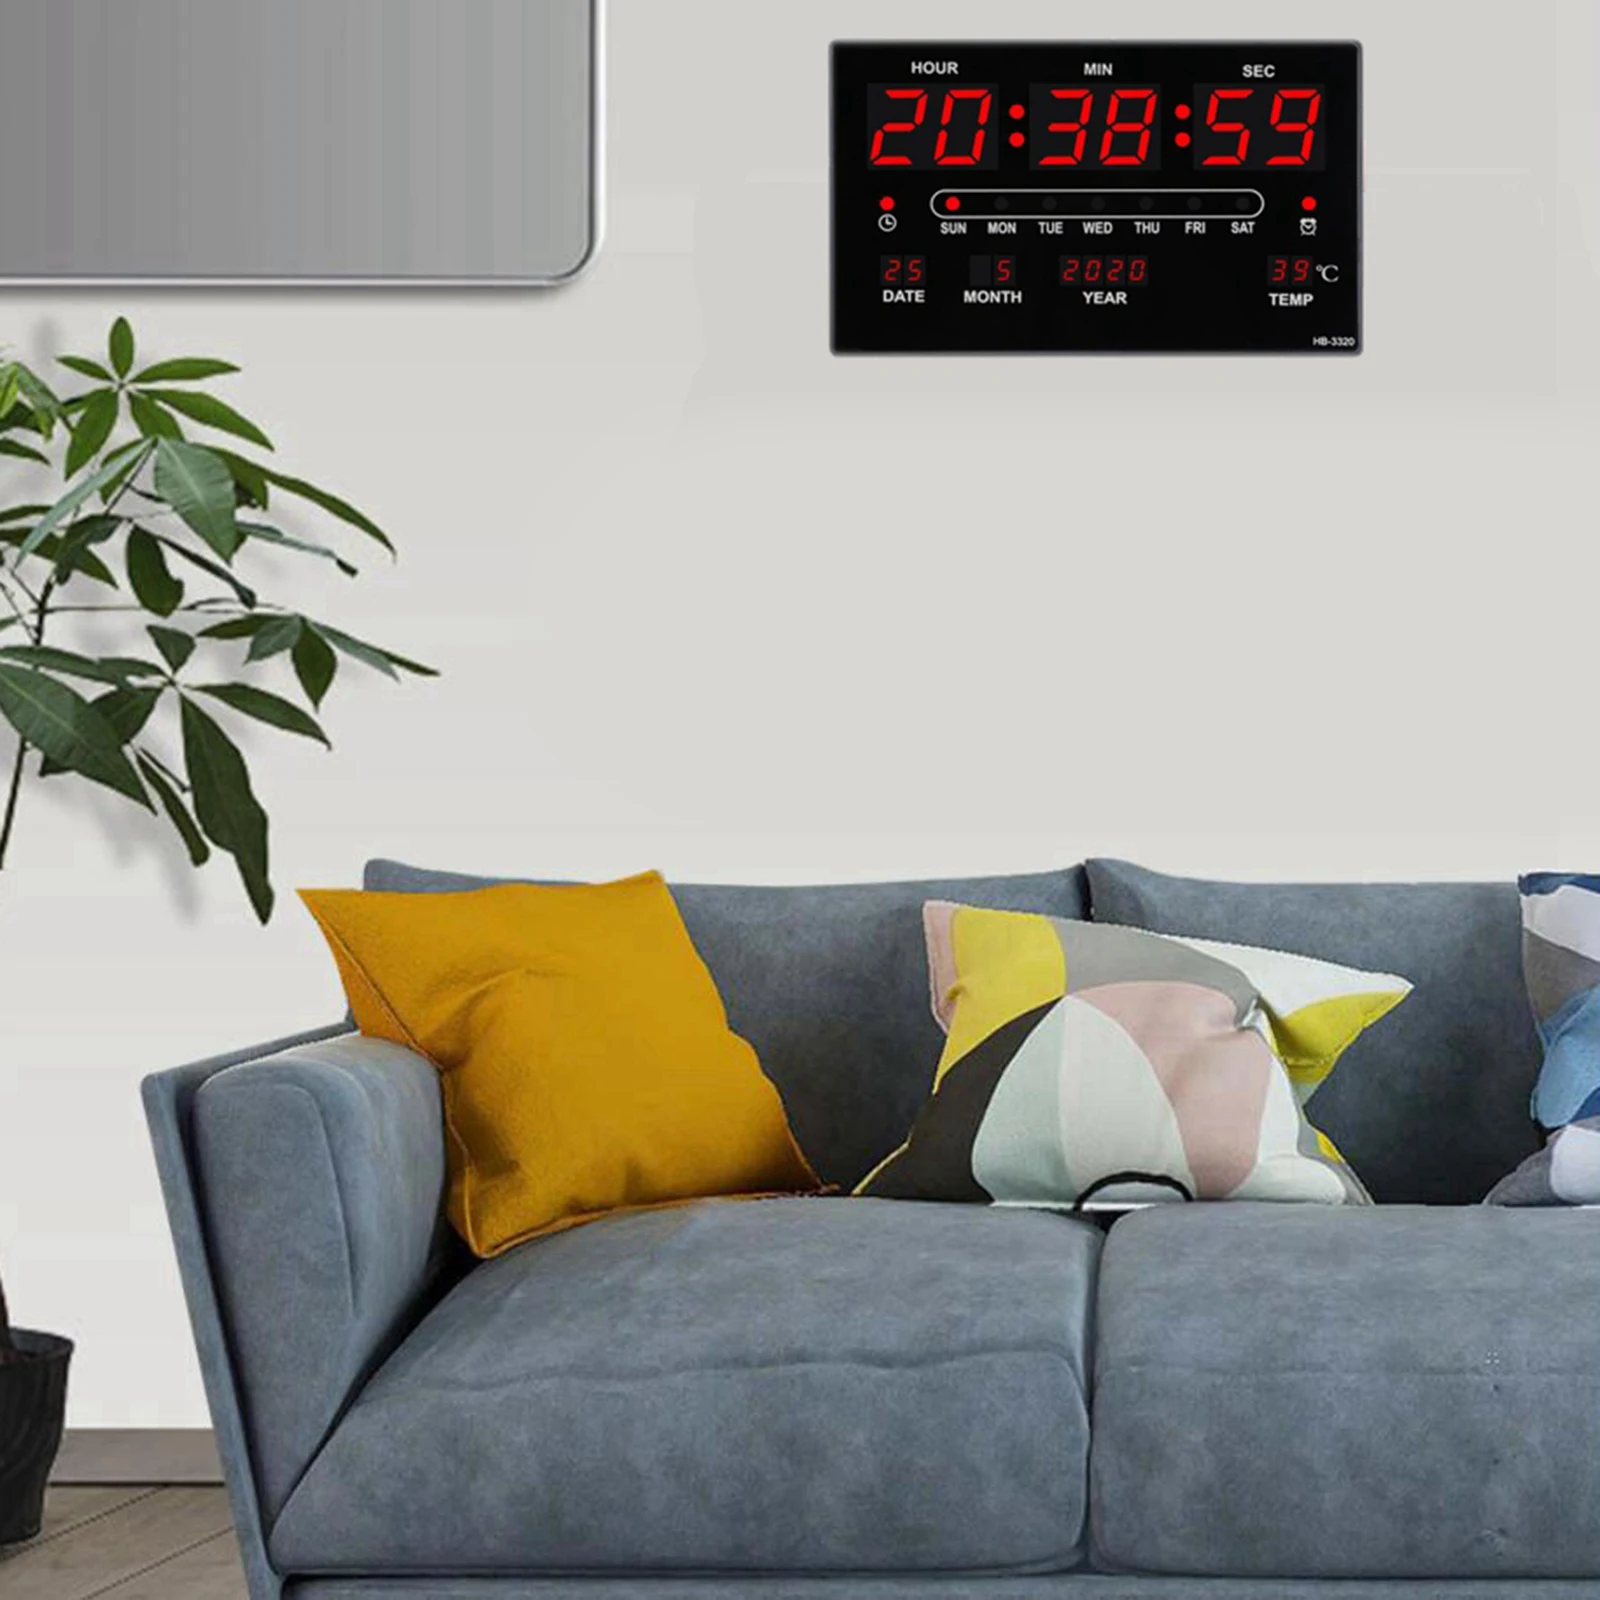 Digital LED Wall Desk Alarm Clock LED Wall Clock with Calendar Temperature 12H 24H Display